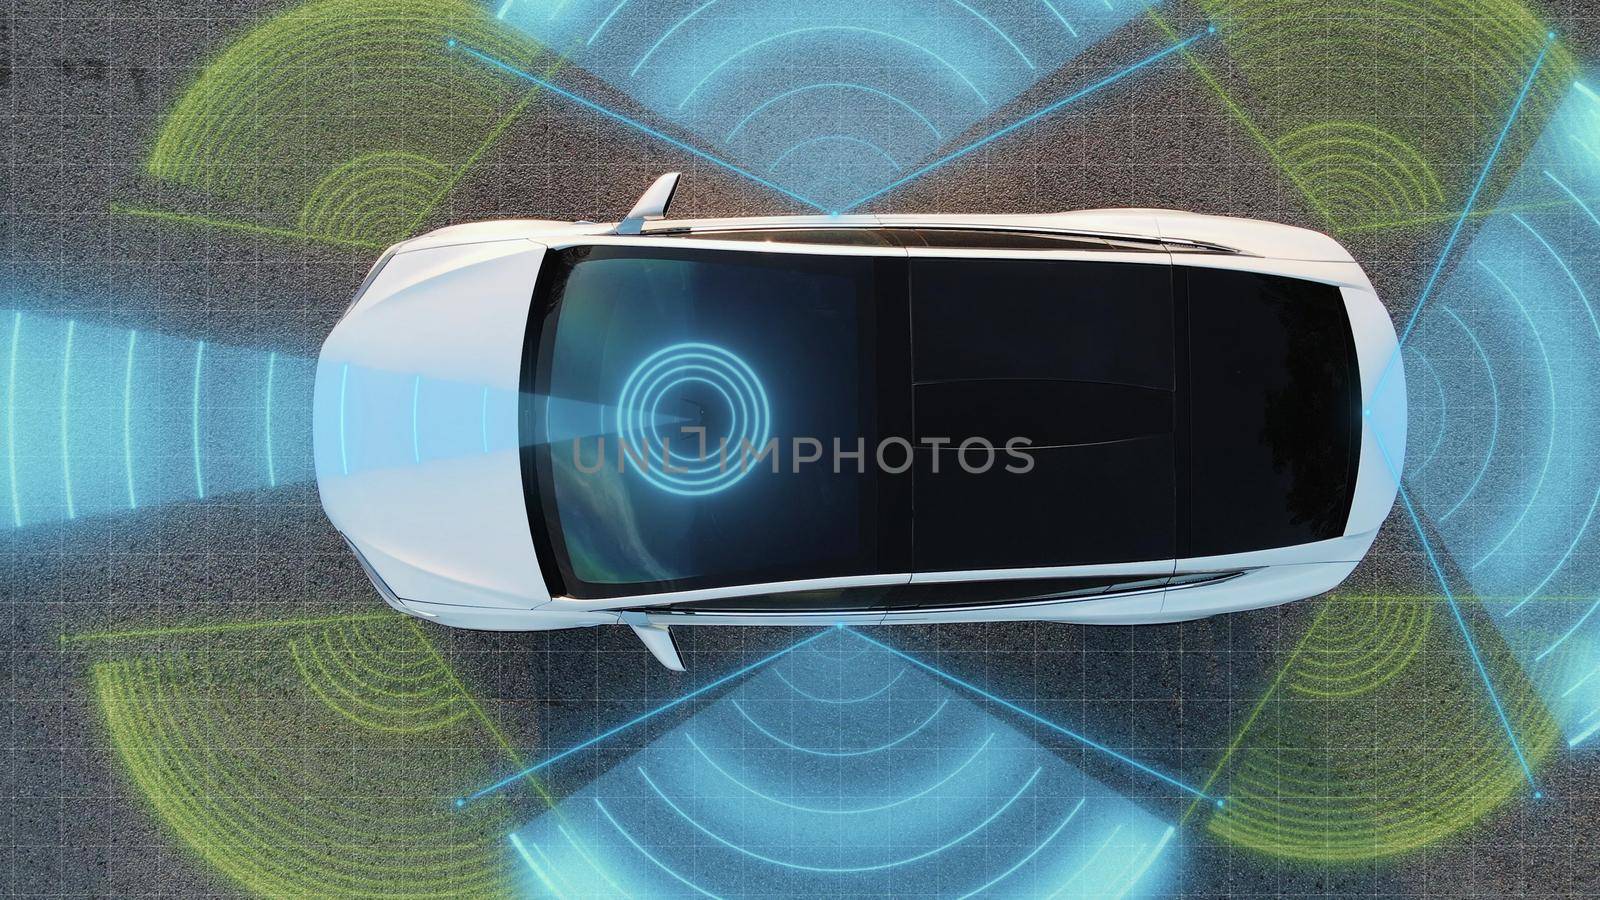 Self Driving Autopilot Car Technologies, Radar, 360, Sensor, Cameras, Laser. Artificial Intelligence Digitalizes and Analyzes Road. Sensor Scanning Road Ahead for Vehicles, Danger, Speed Limits.